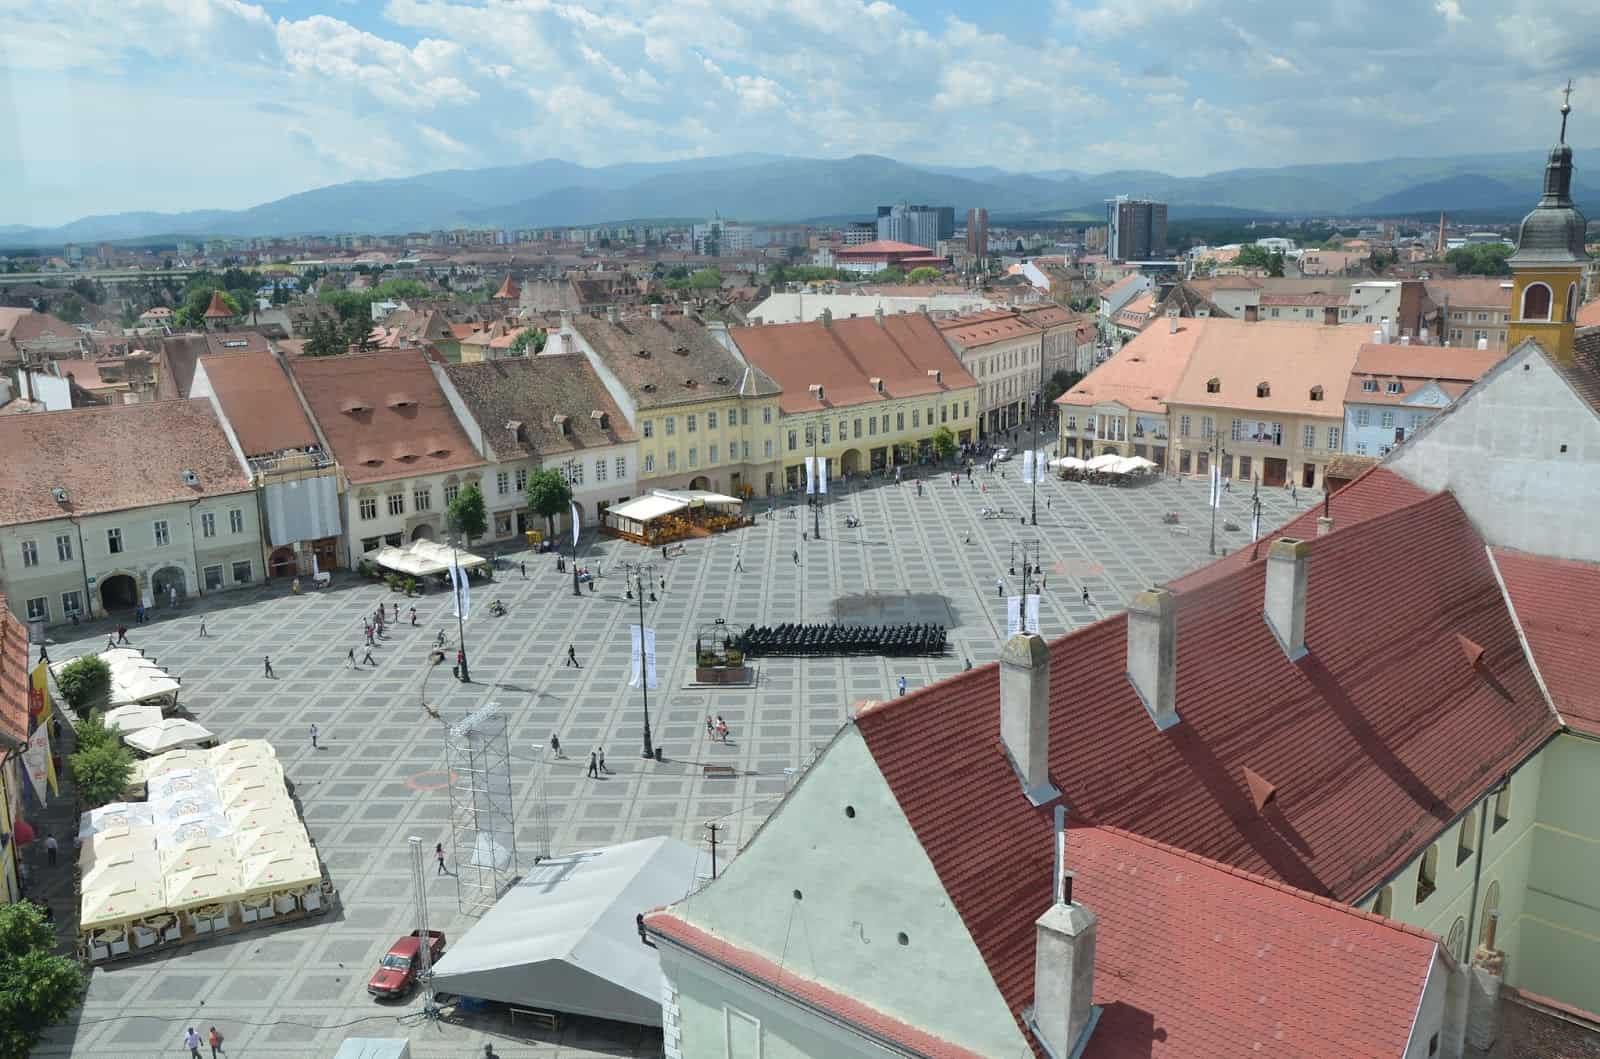 Grand Square from Council Tower in Sibiu, Romania